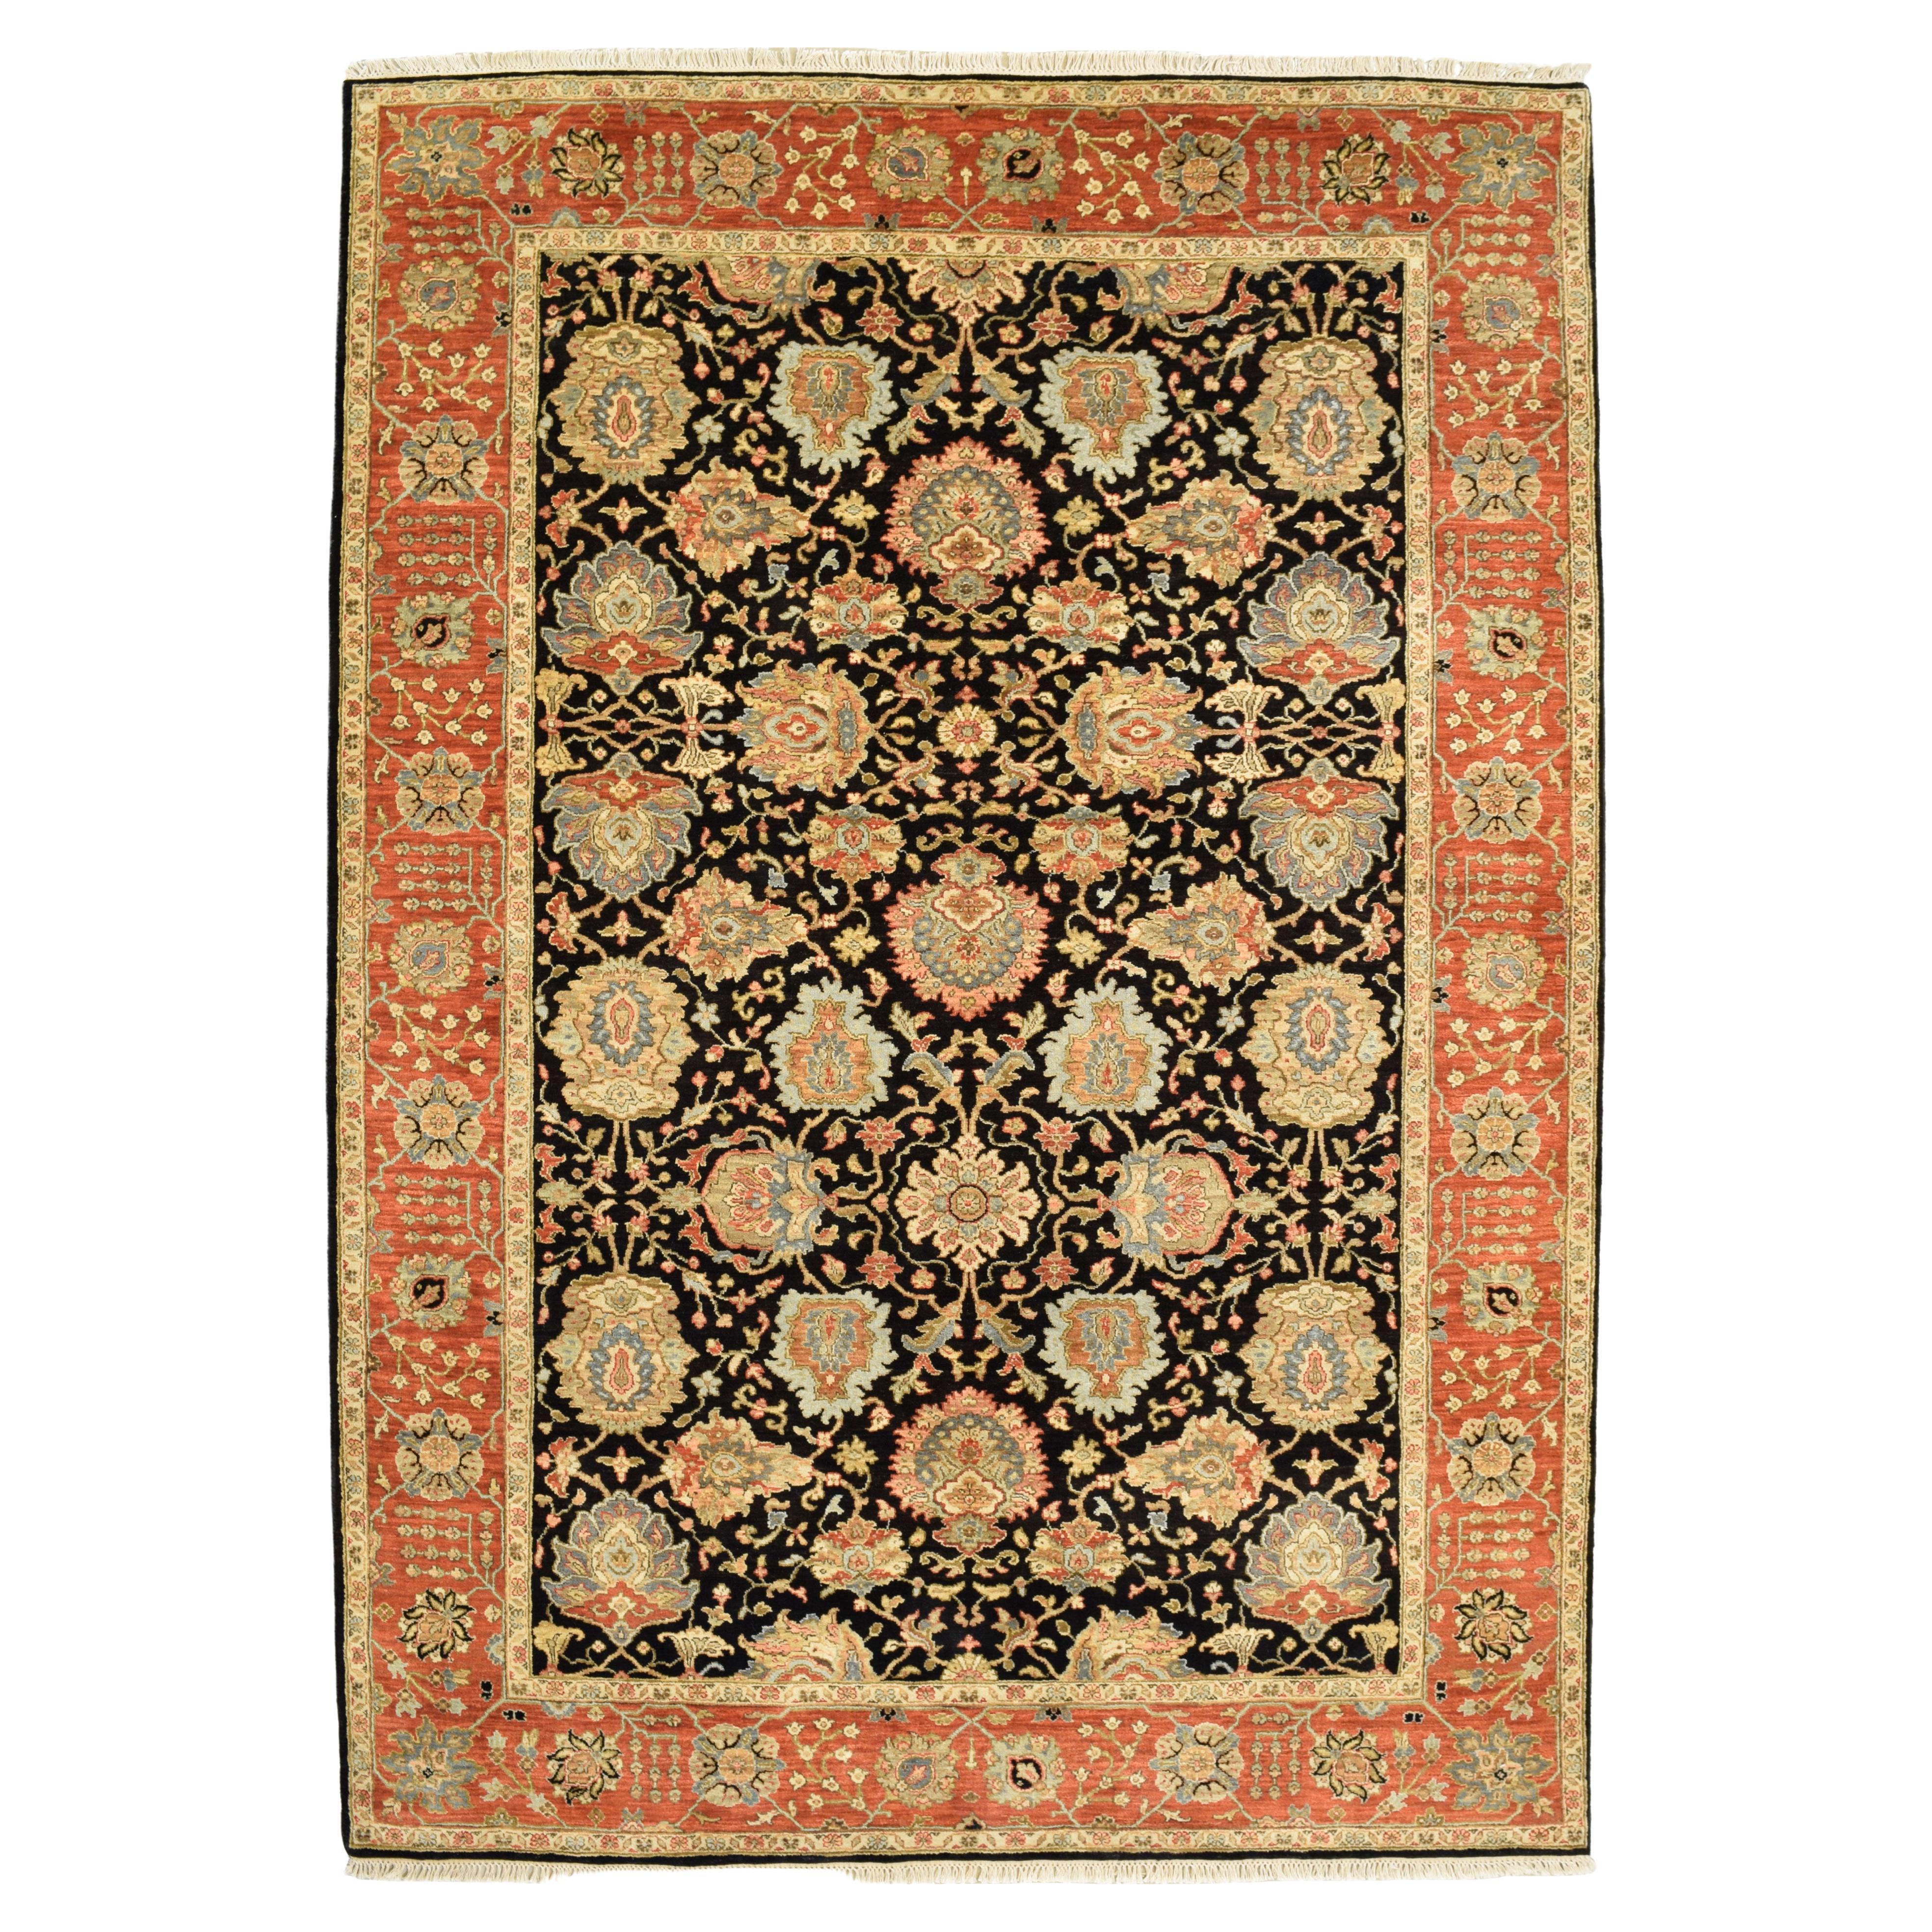 Persian Agra Carpet, Red, Orange, and Black Wool, 6' x 9'